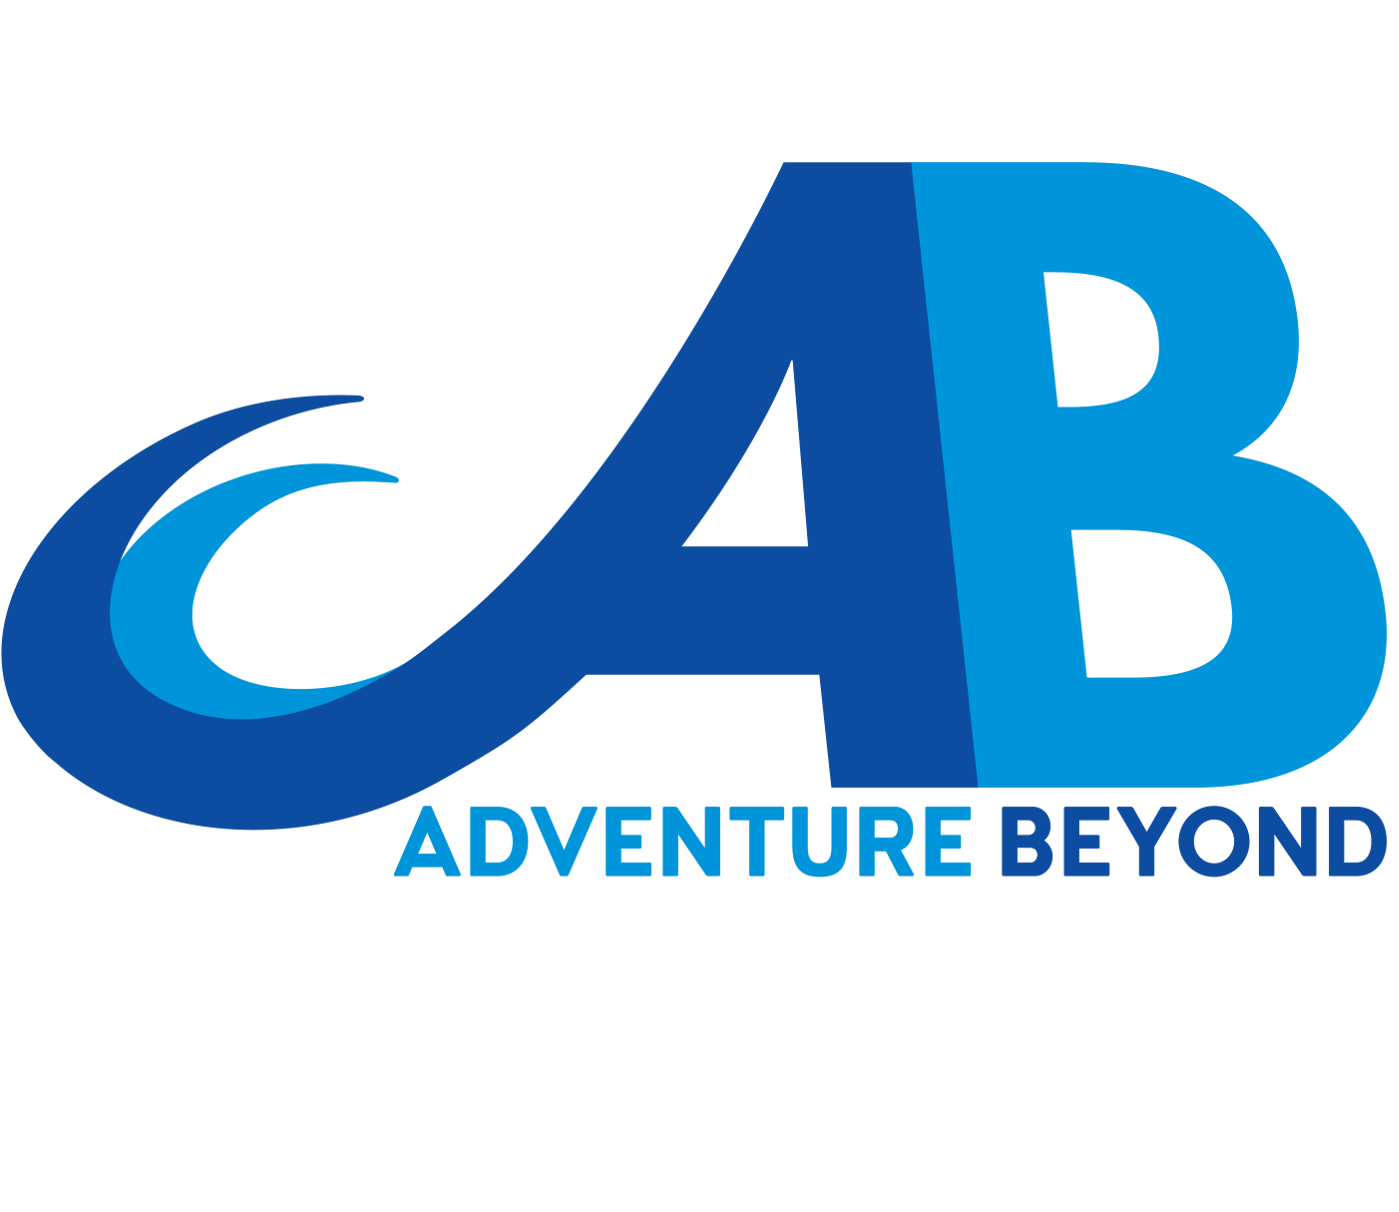 Adventure beyond